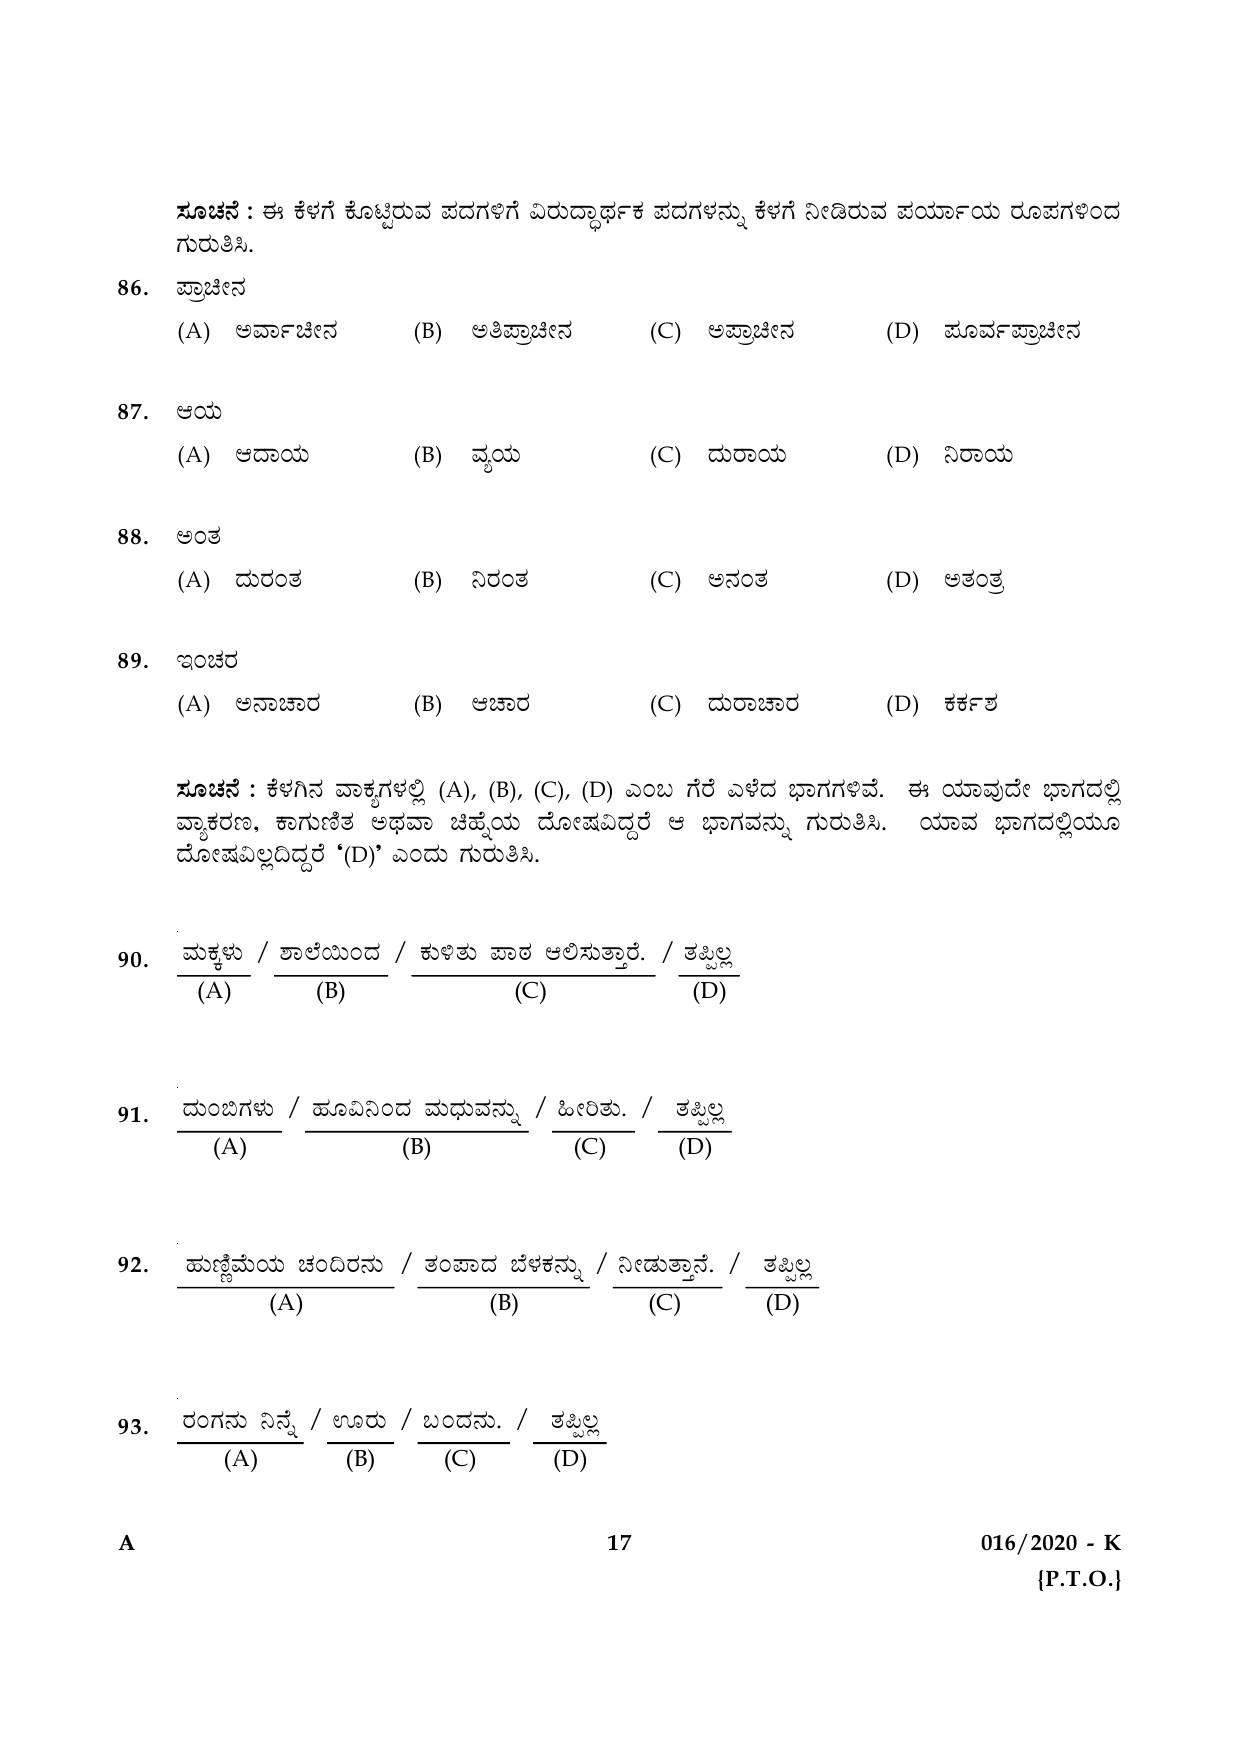 KAS Officer Trainee Kannada Exam 2020 Code 0162020 16